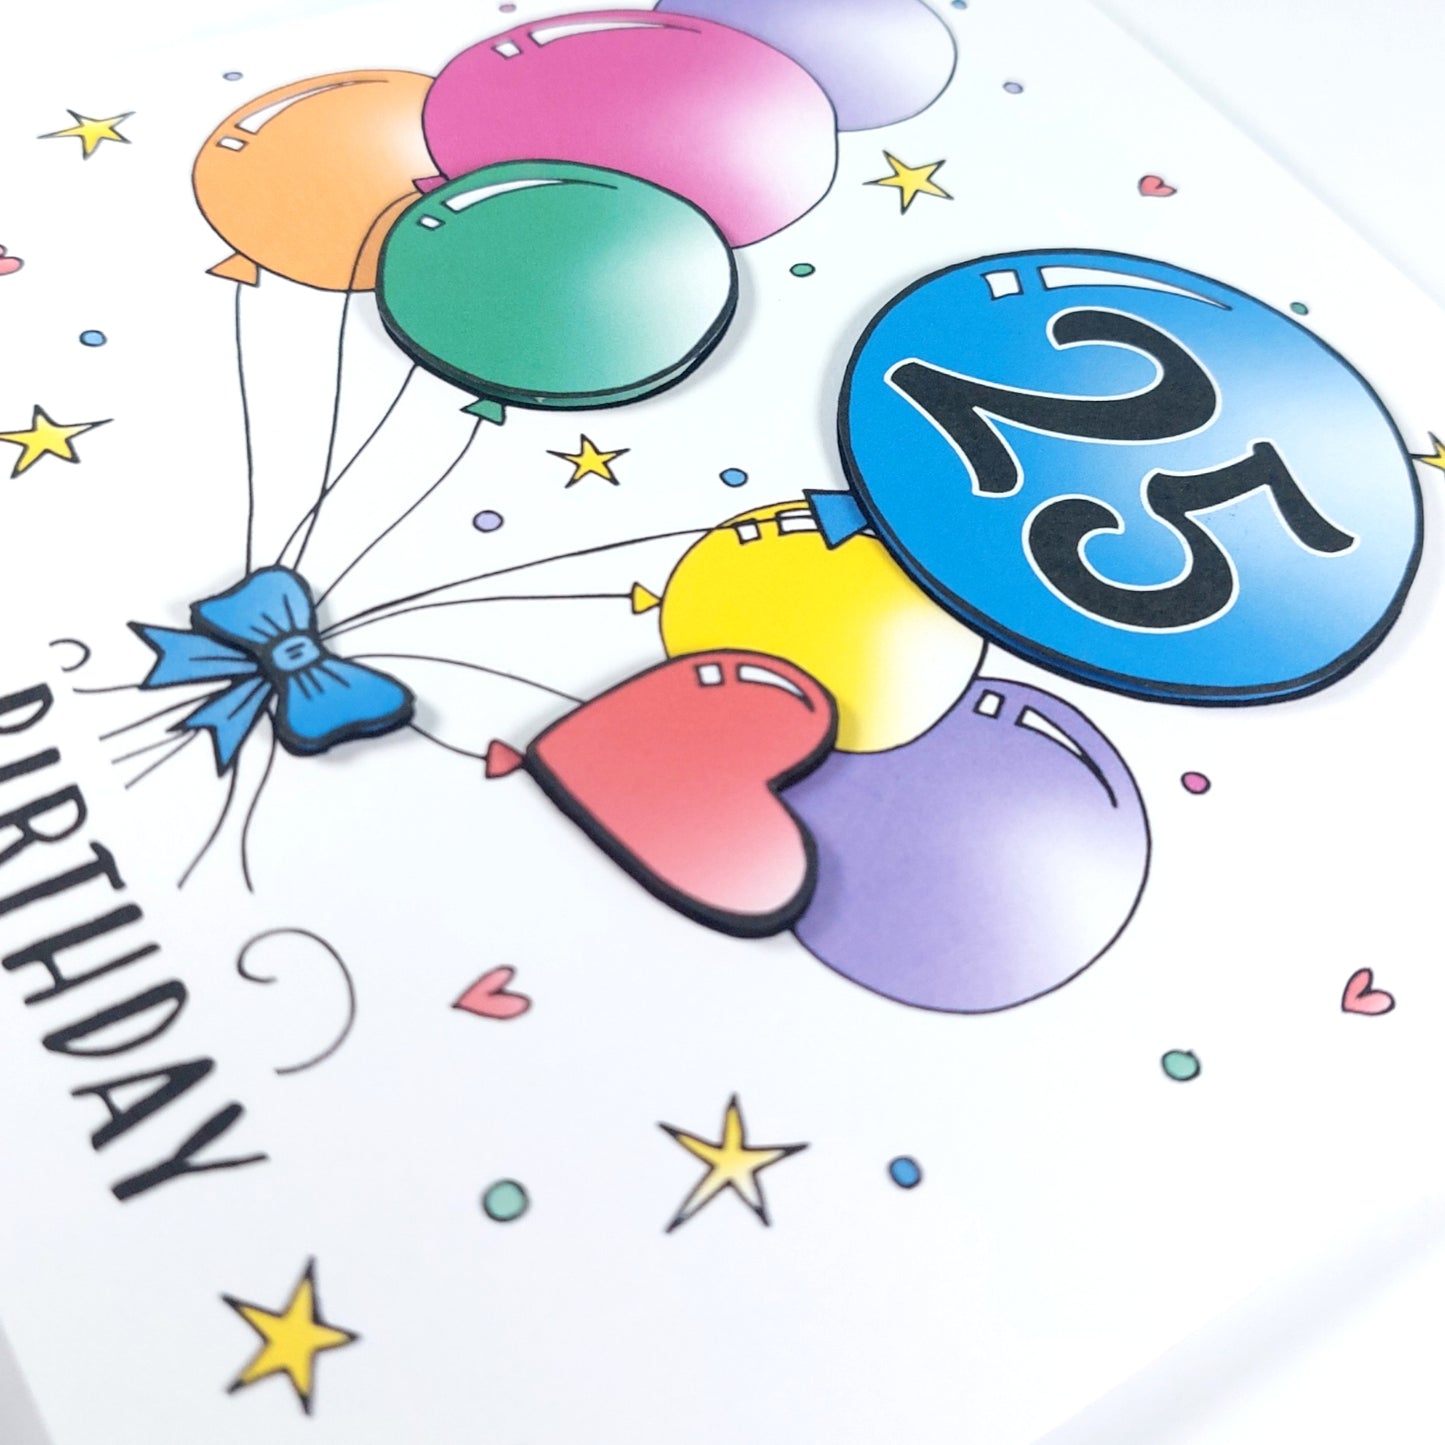 25th Balloons Birthday Card